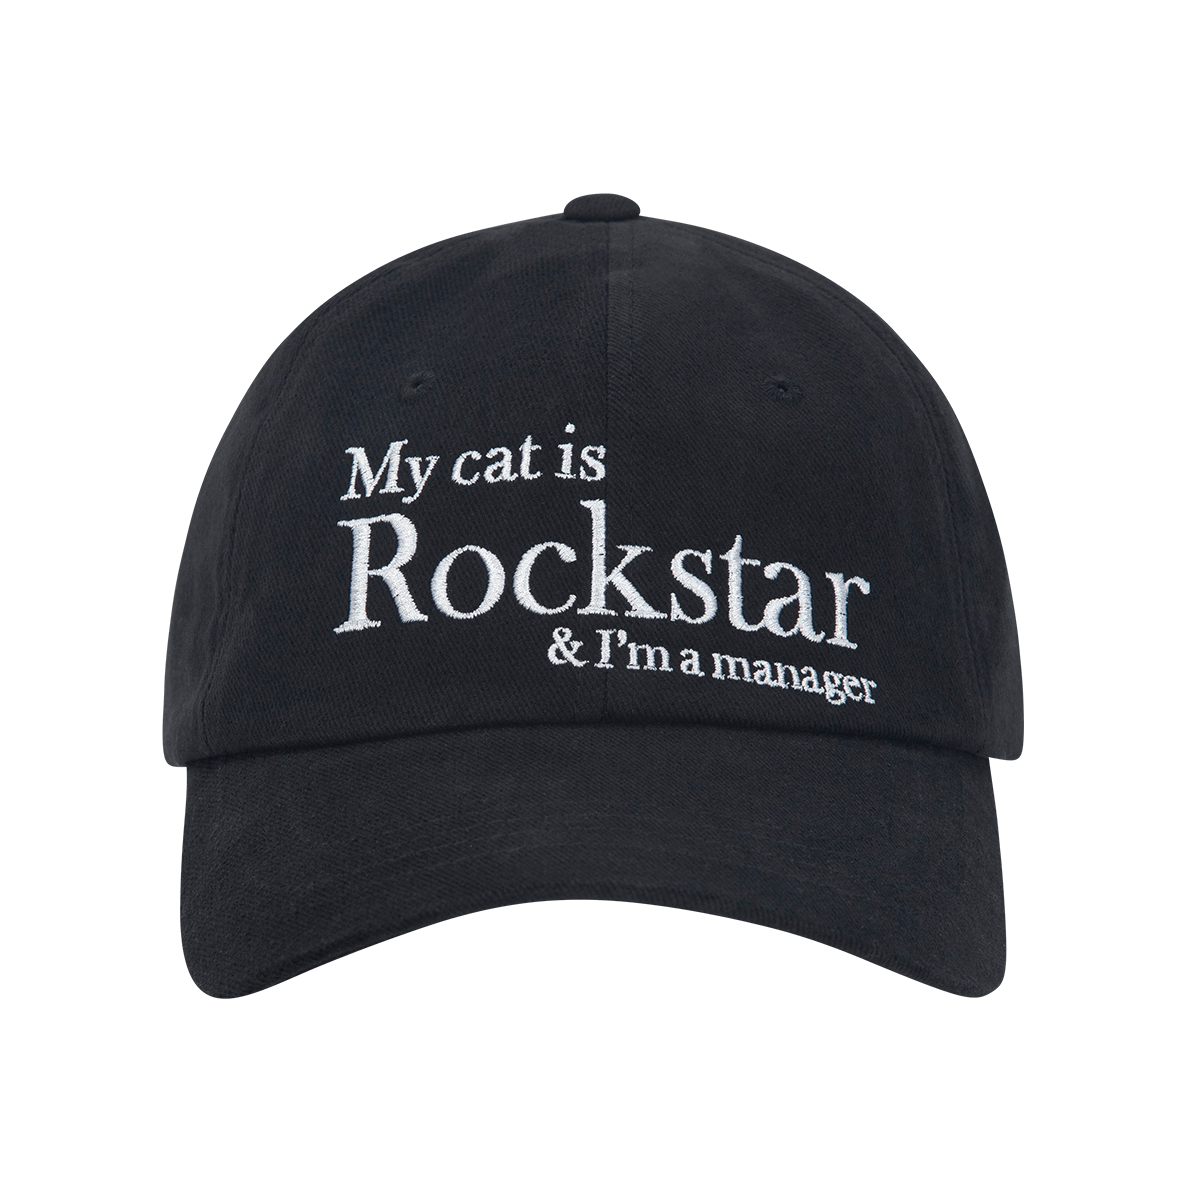 My cat is Rockstar Baseball cap (Black) [04/03 배송]